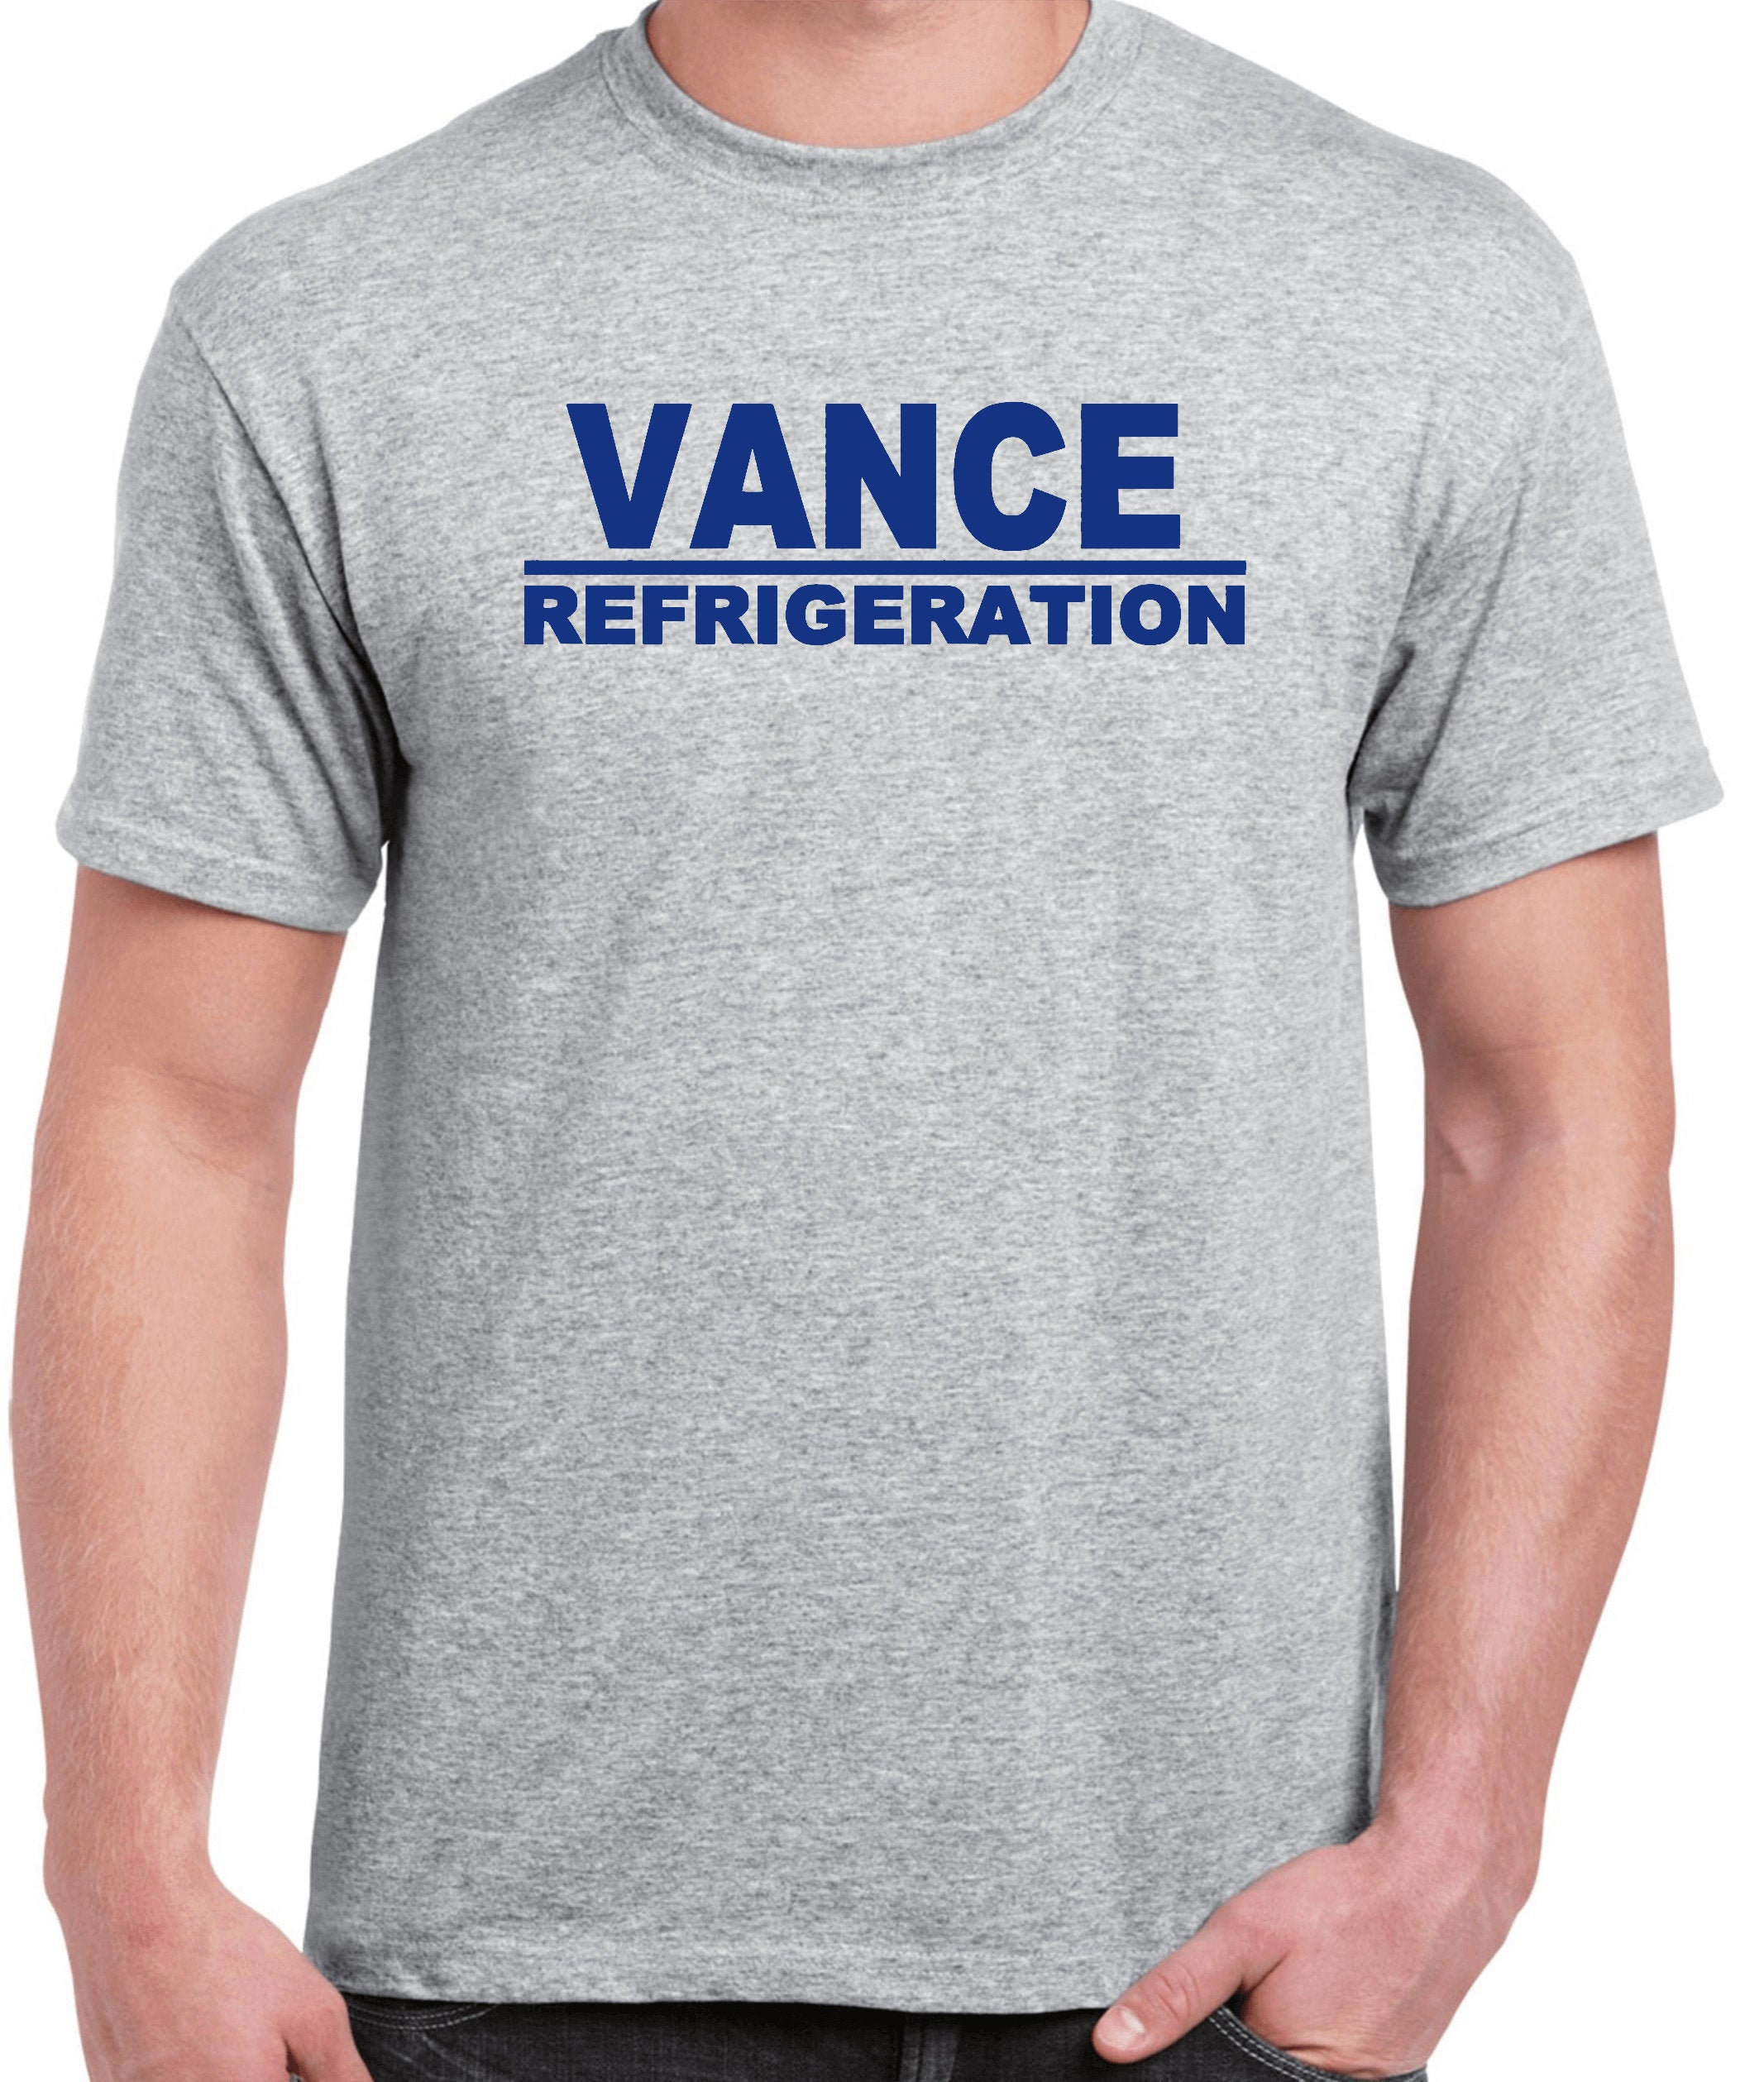 Vance Refrigeration Shirt Bob Vance Shirt the Office - Etsy